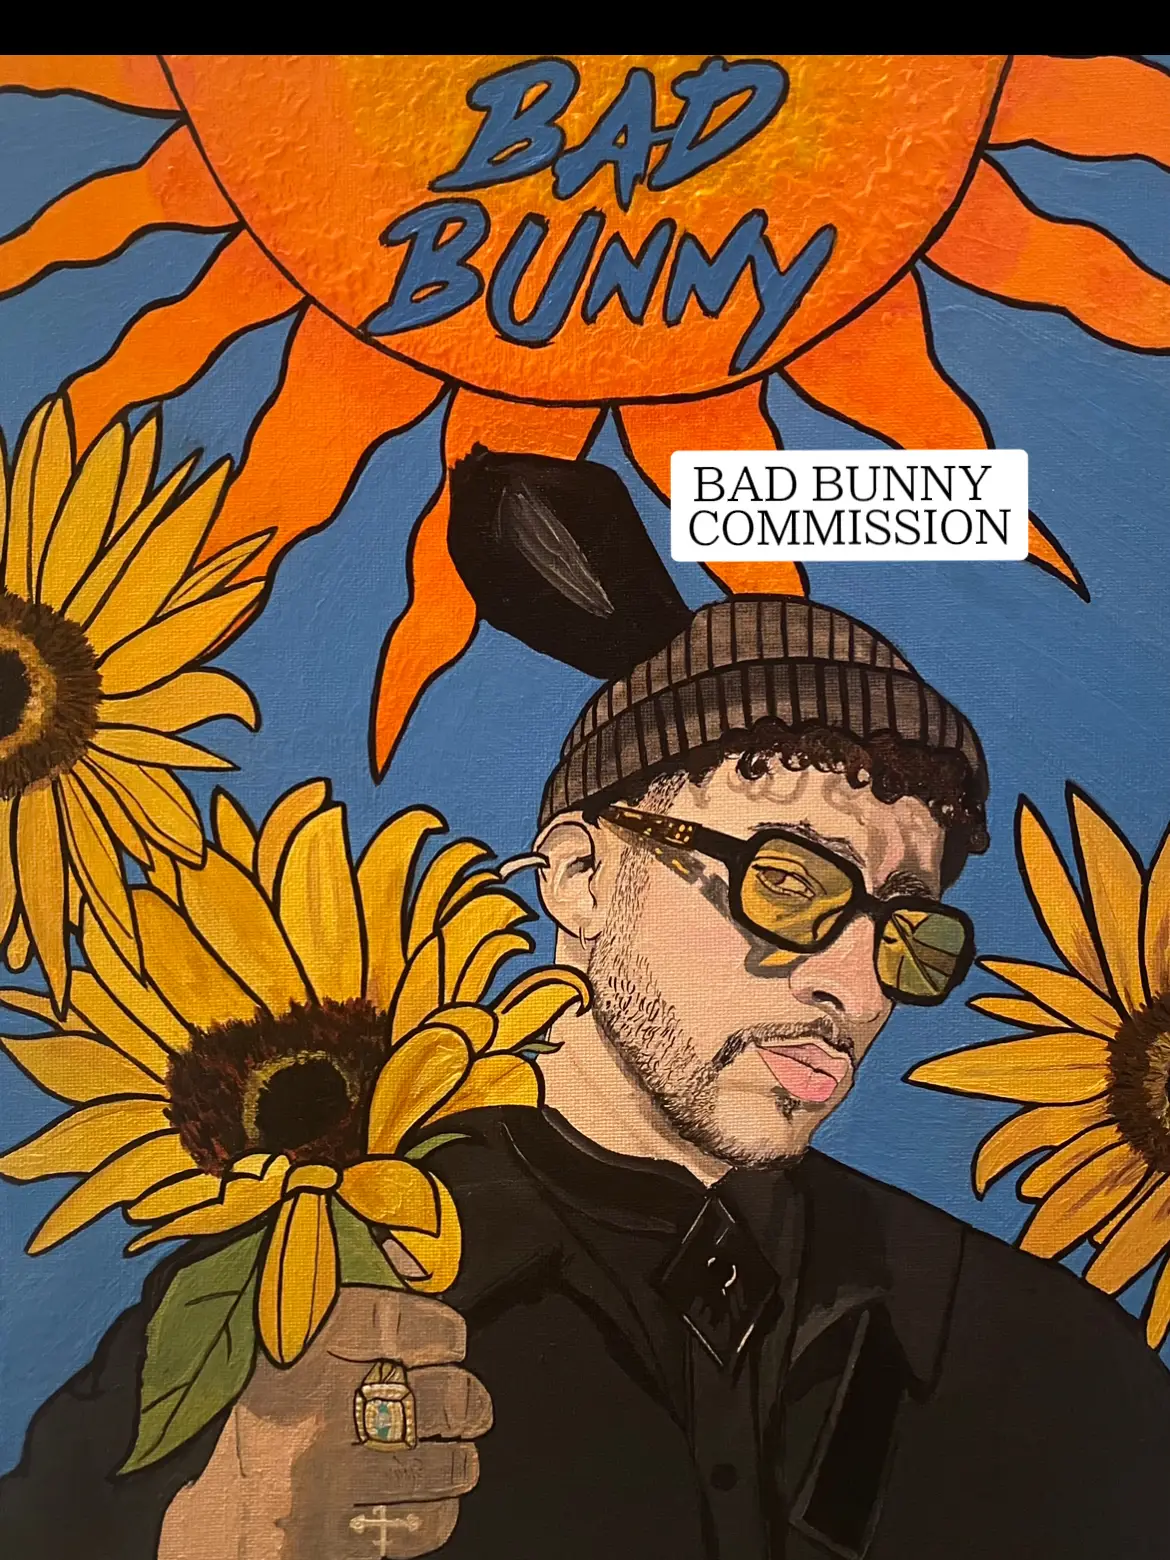 Ouça a nova música de Bad Bunny: “Gato de Noche”